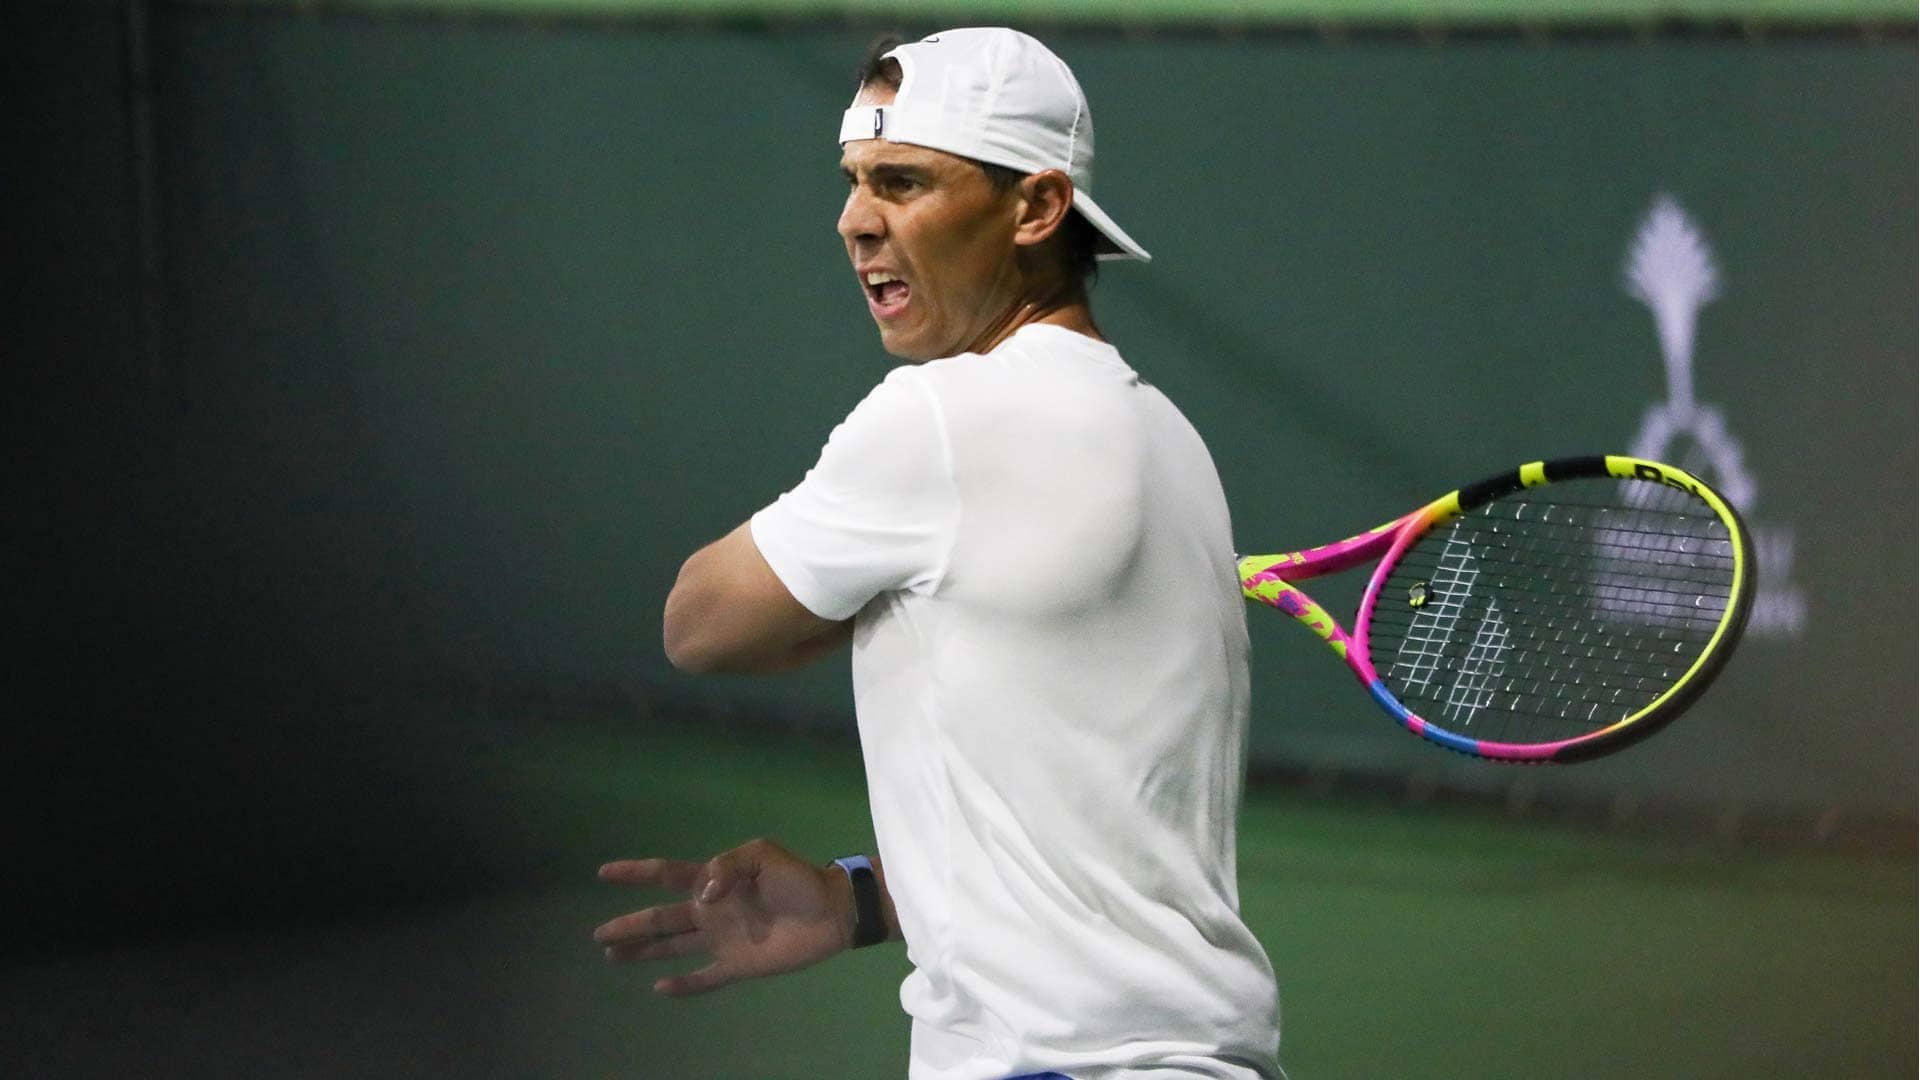 Rafael Nadal: Optimistic Outlook Despite Setbacks on the Clay